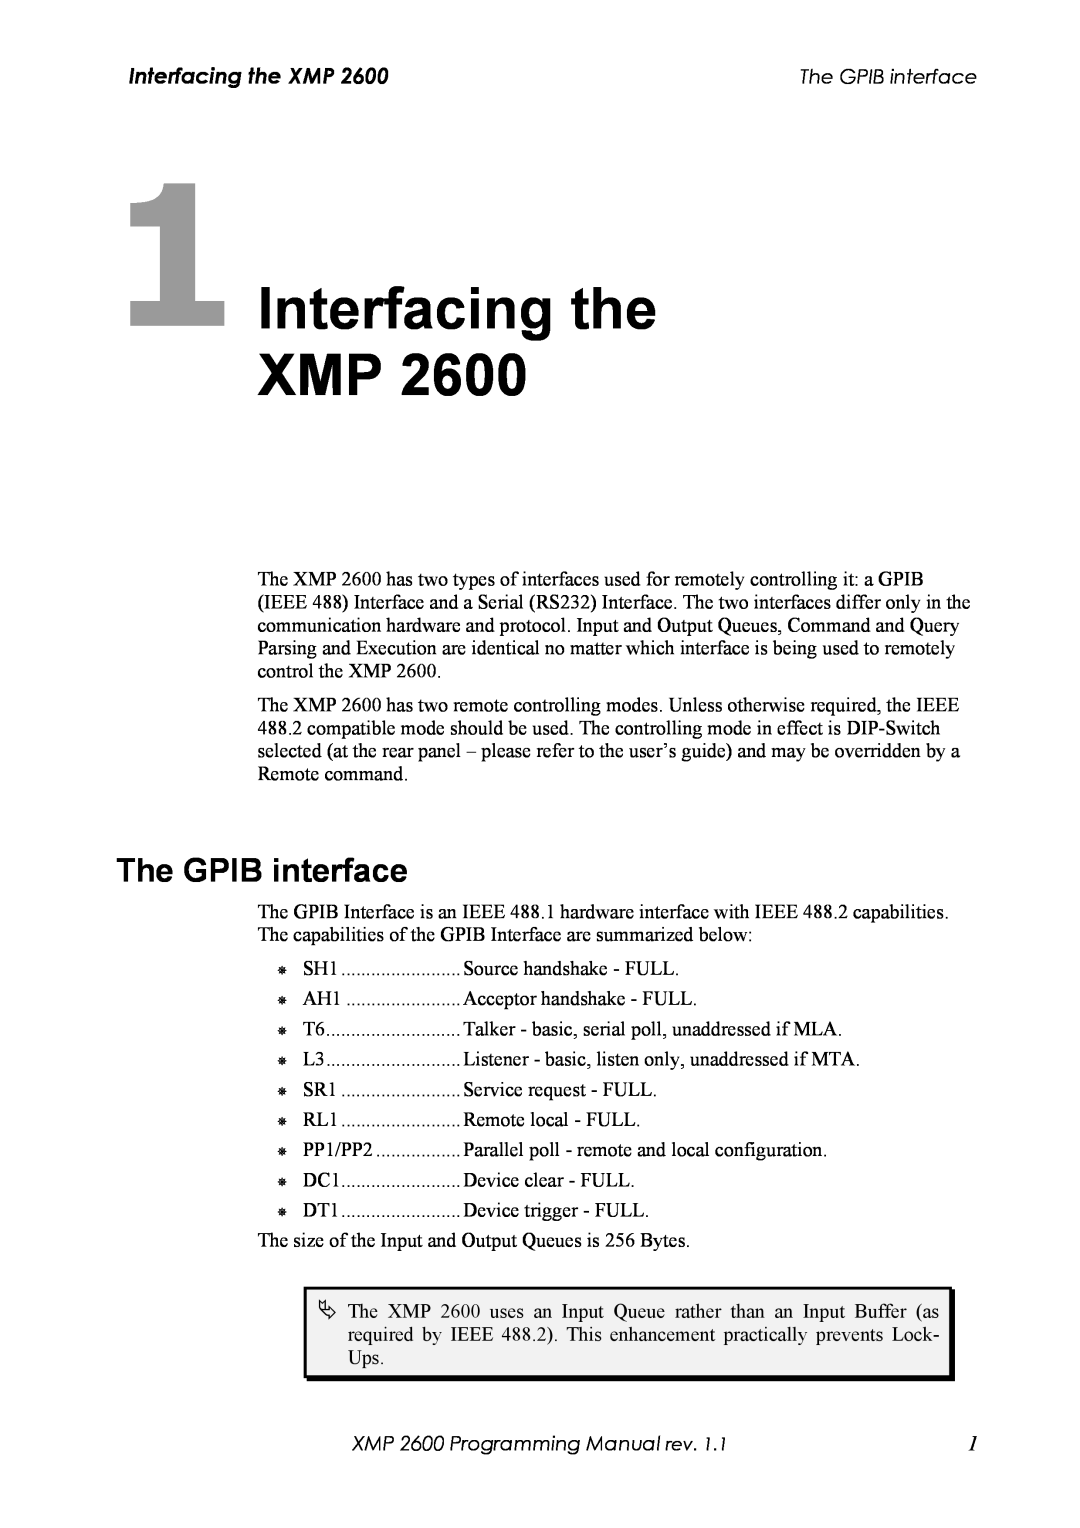 Xantrex Technology manual 1Interfacing the XMP, The GPIB interface, XMP 2600 Programming Manual rev 